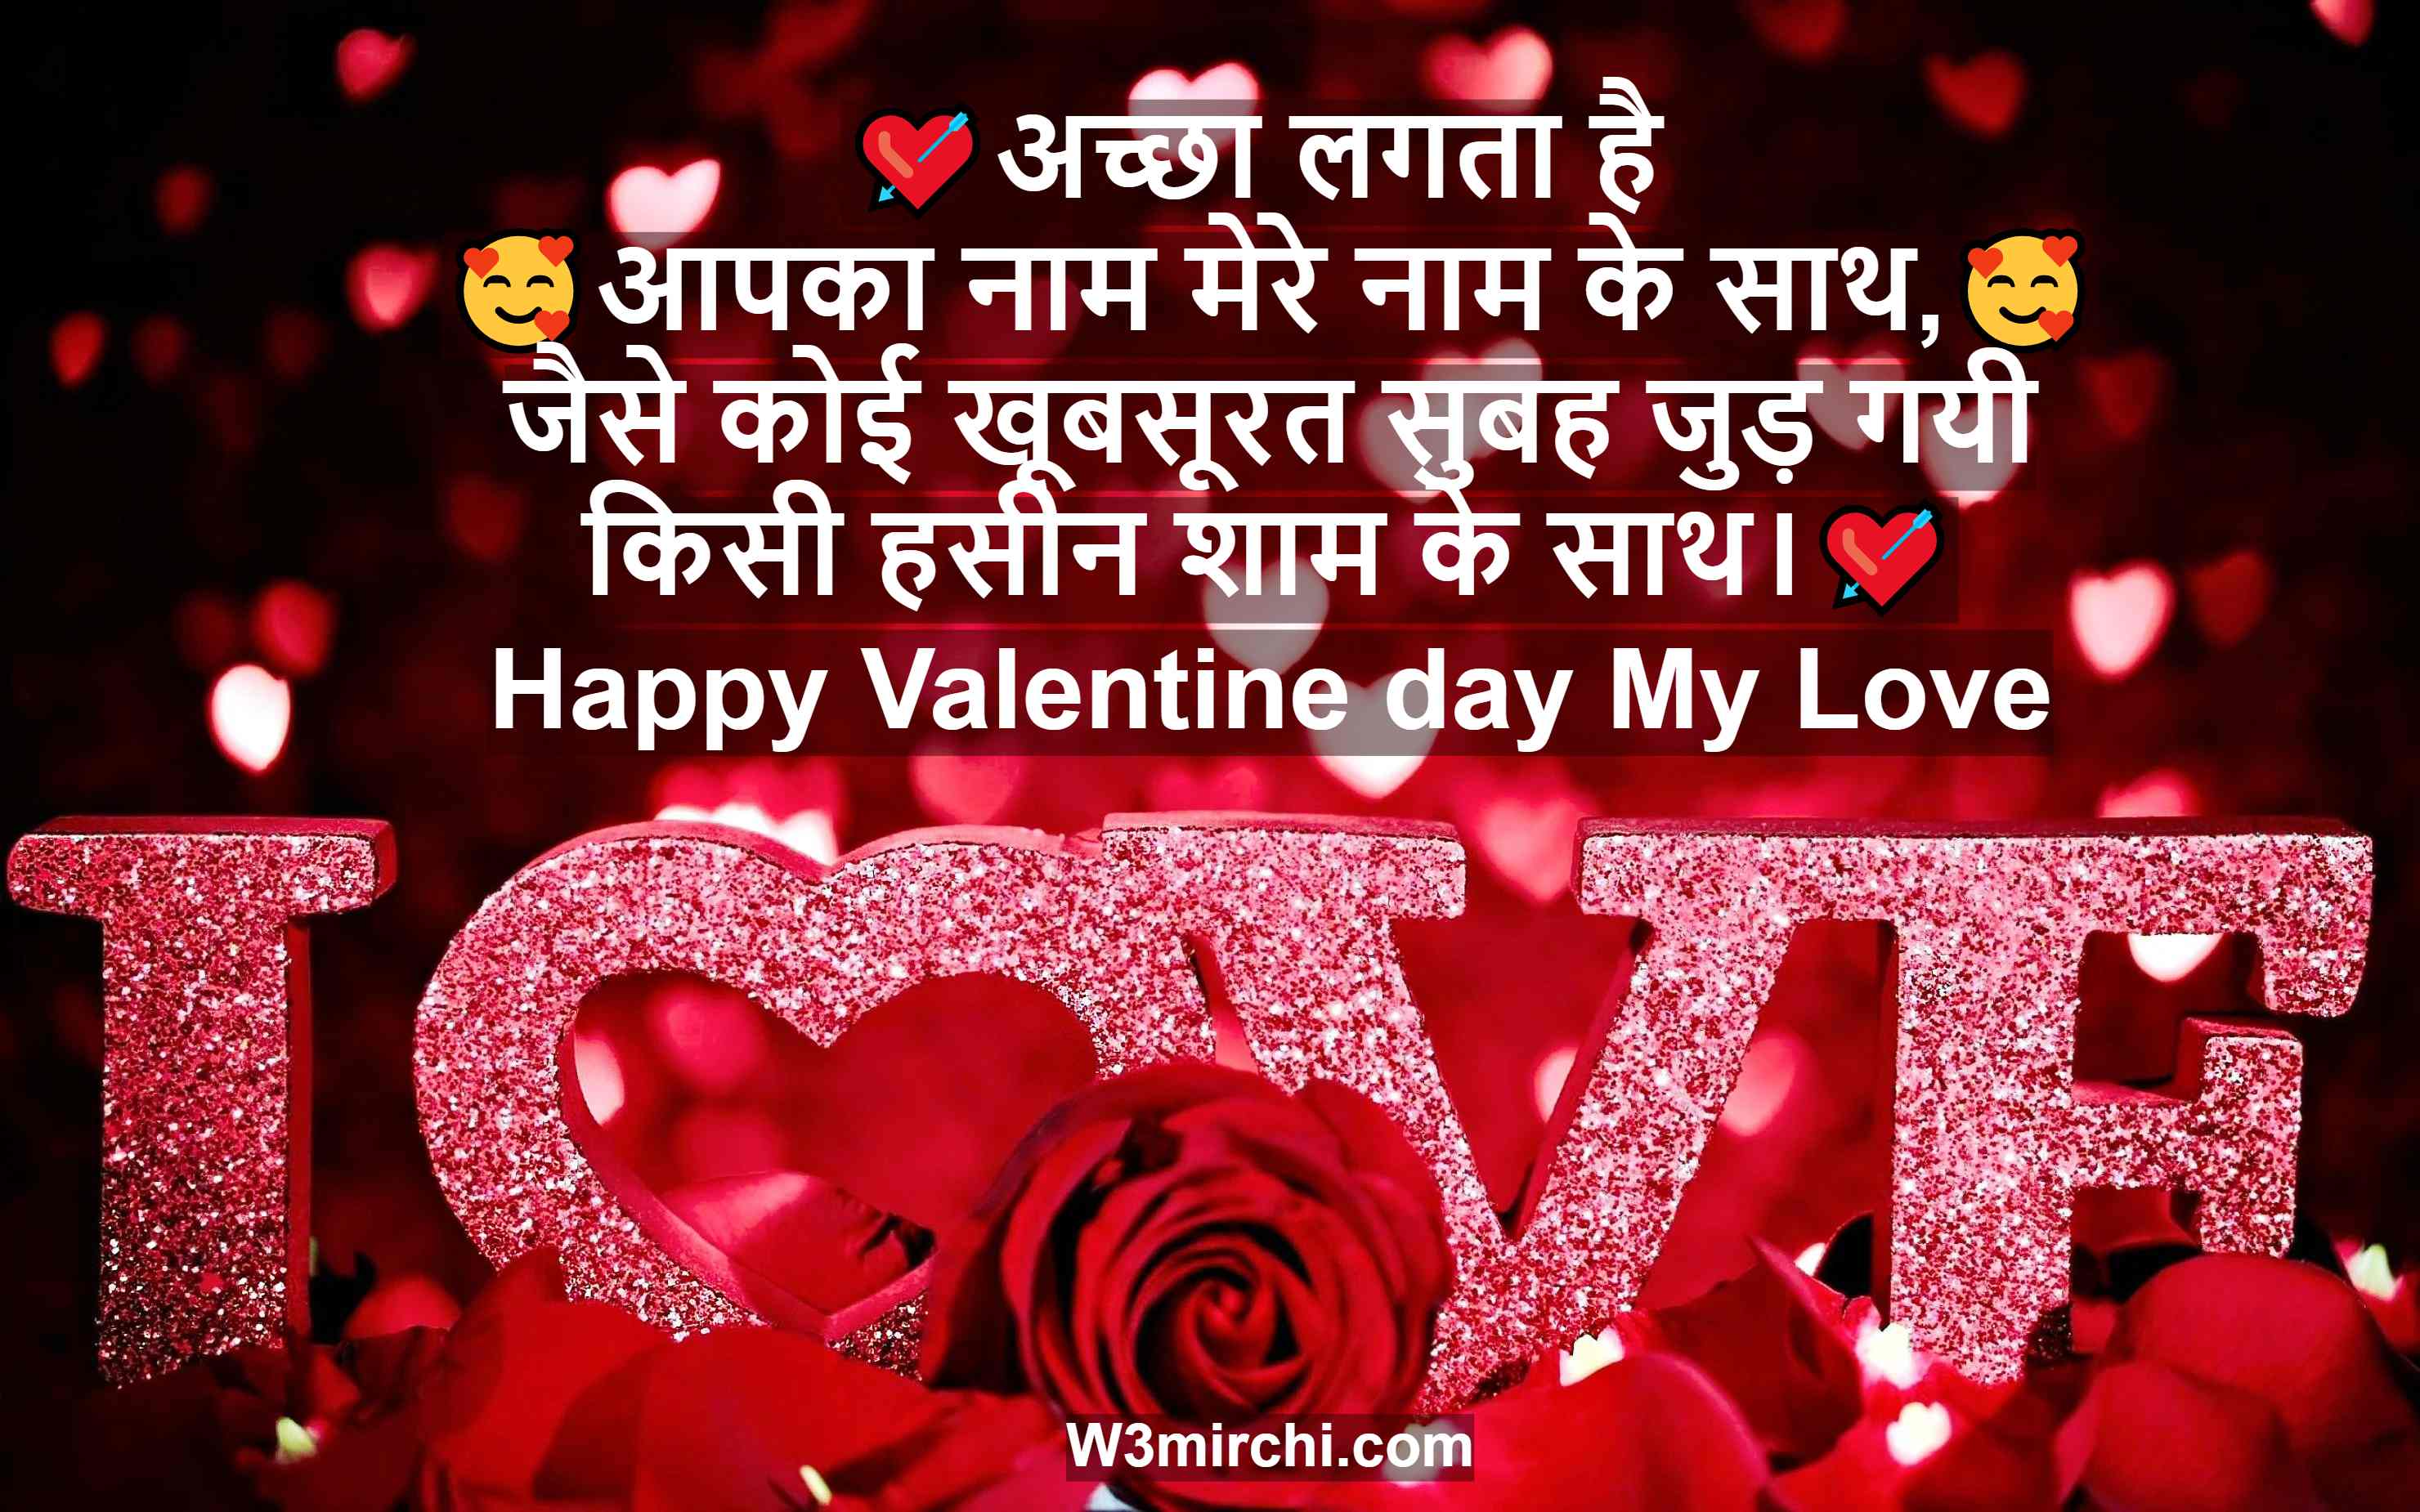 Happy Valentine Day shayari